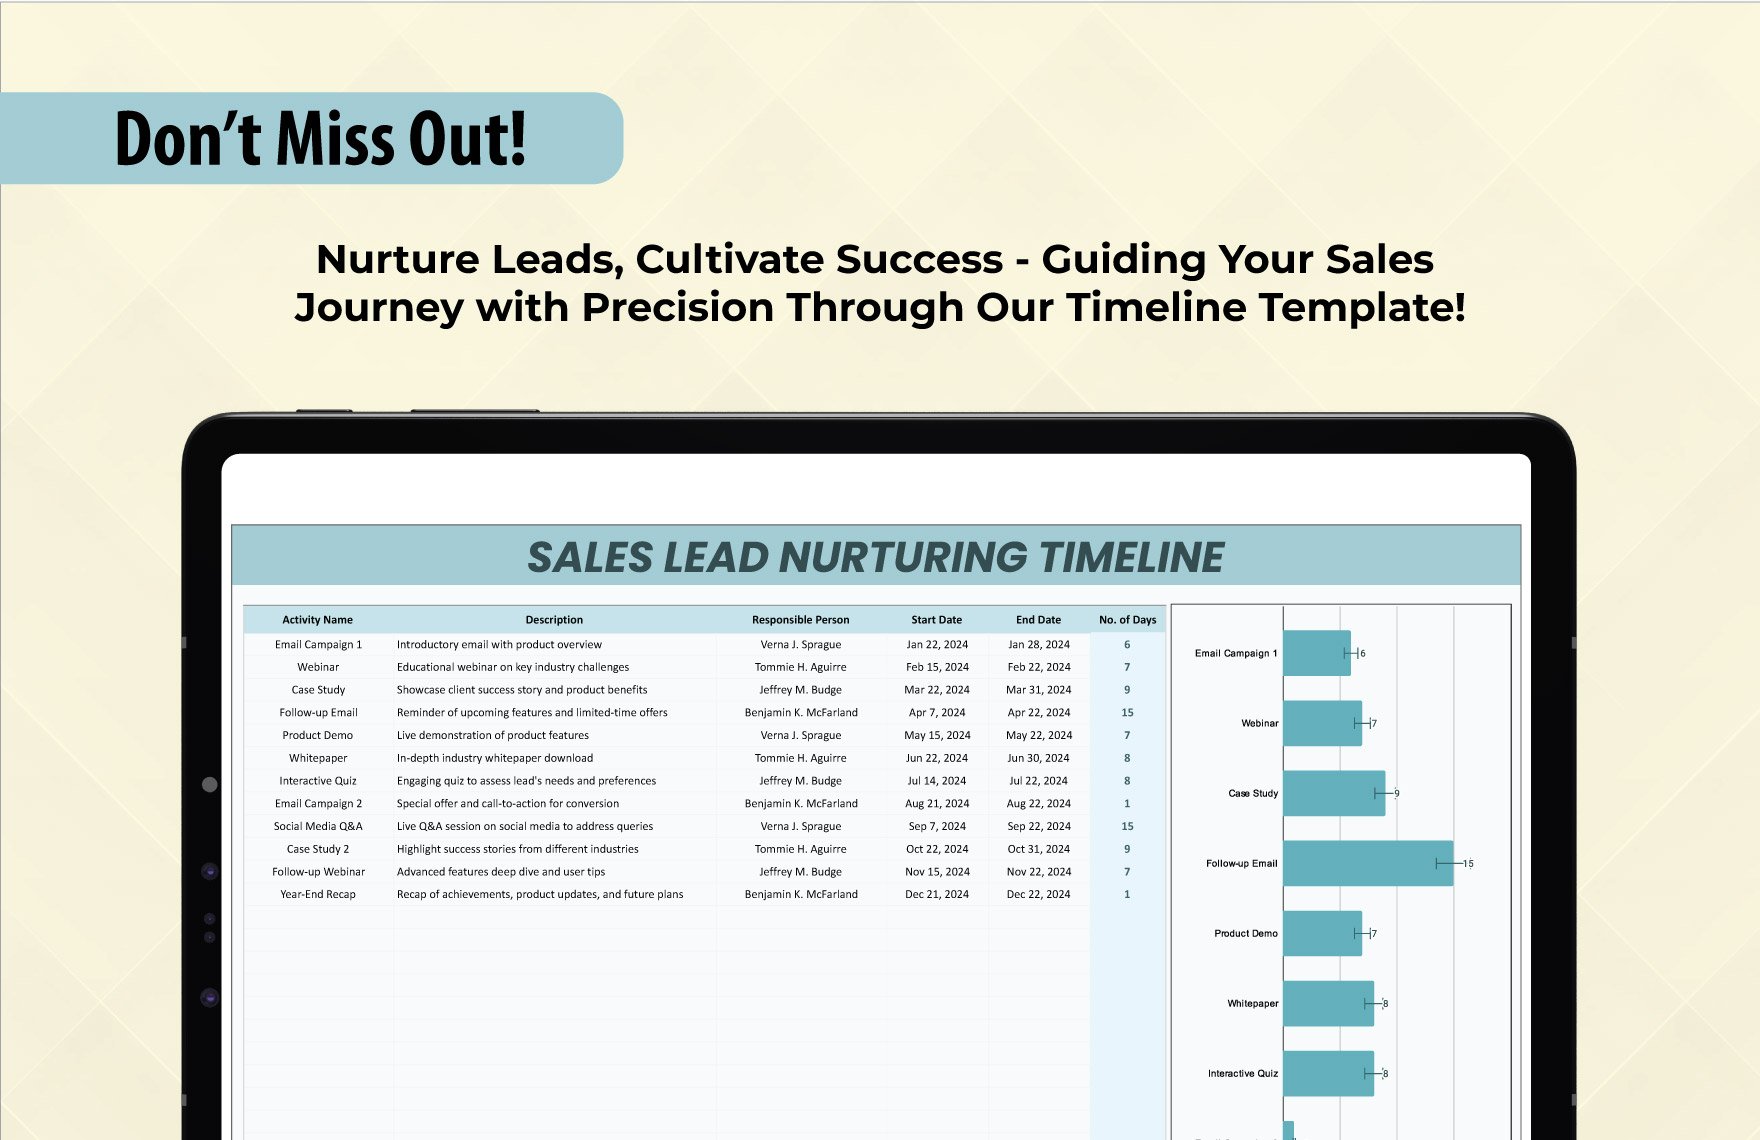 Sales Lead Nurturing Timeline Template